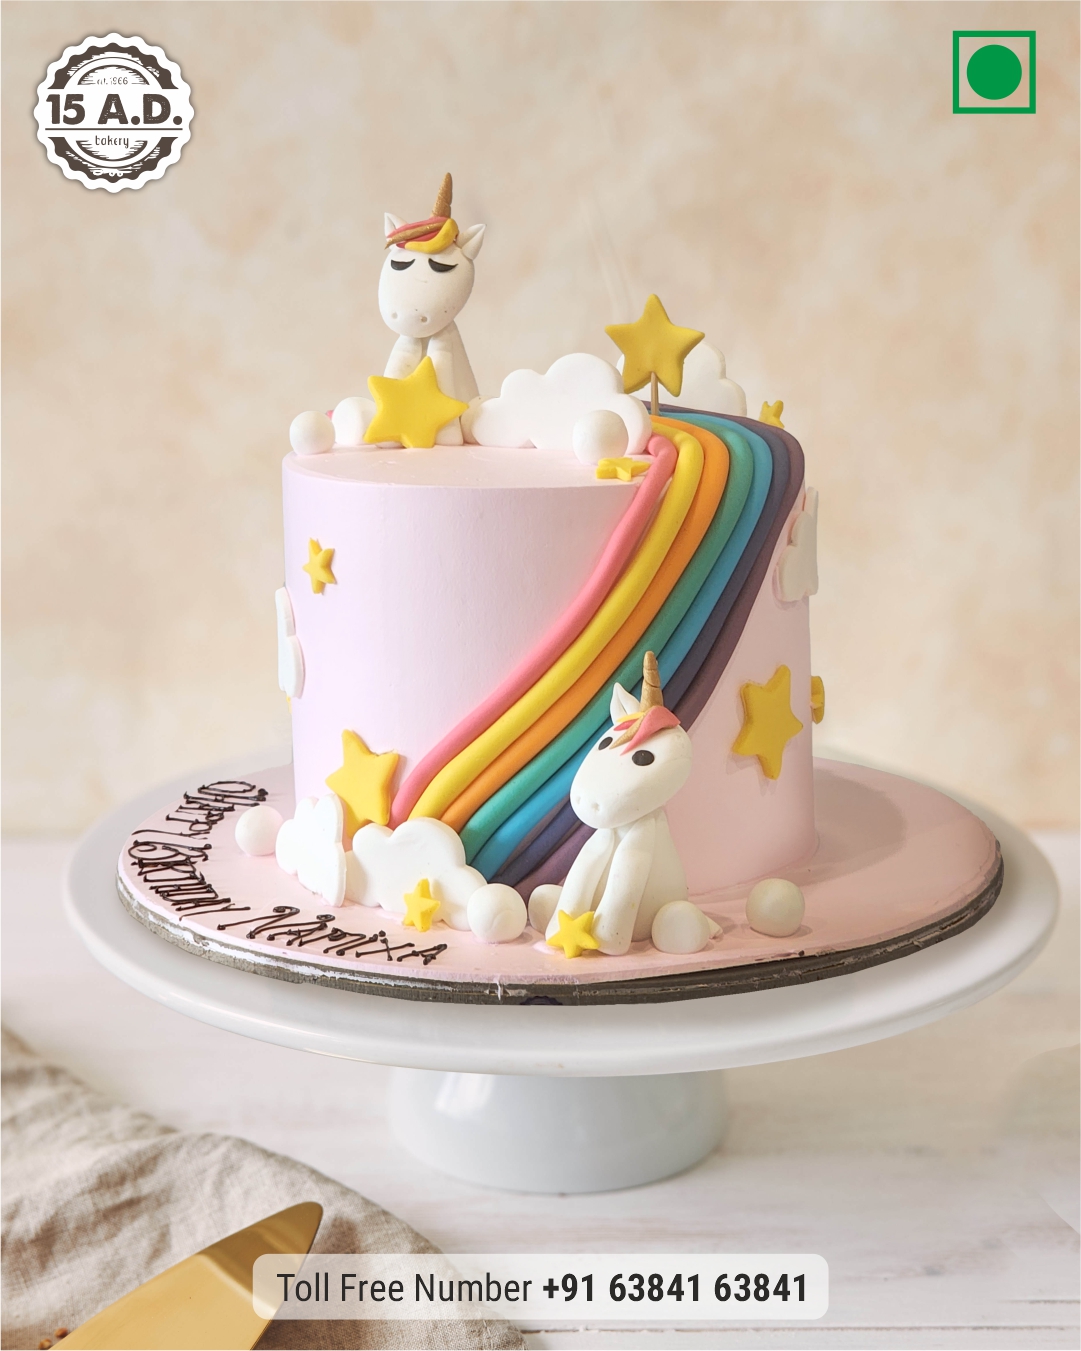 Unicorn & Rainbow Cake by 15 AD Bakery